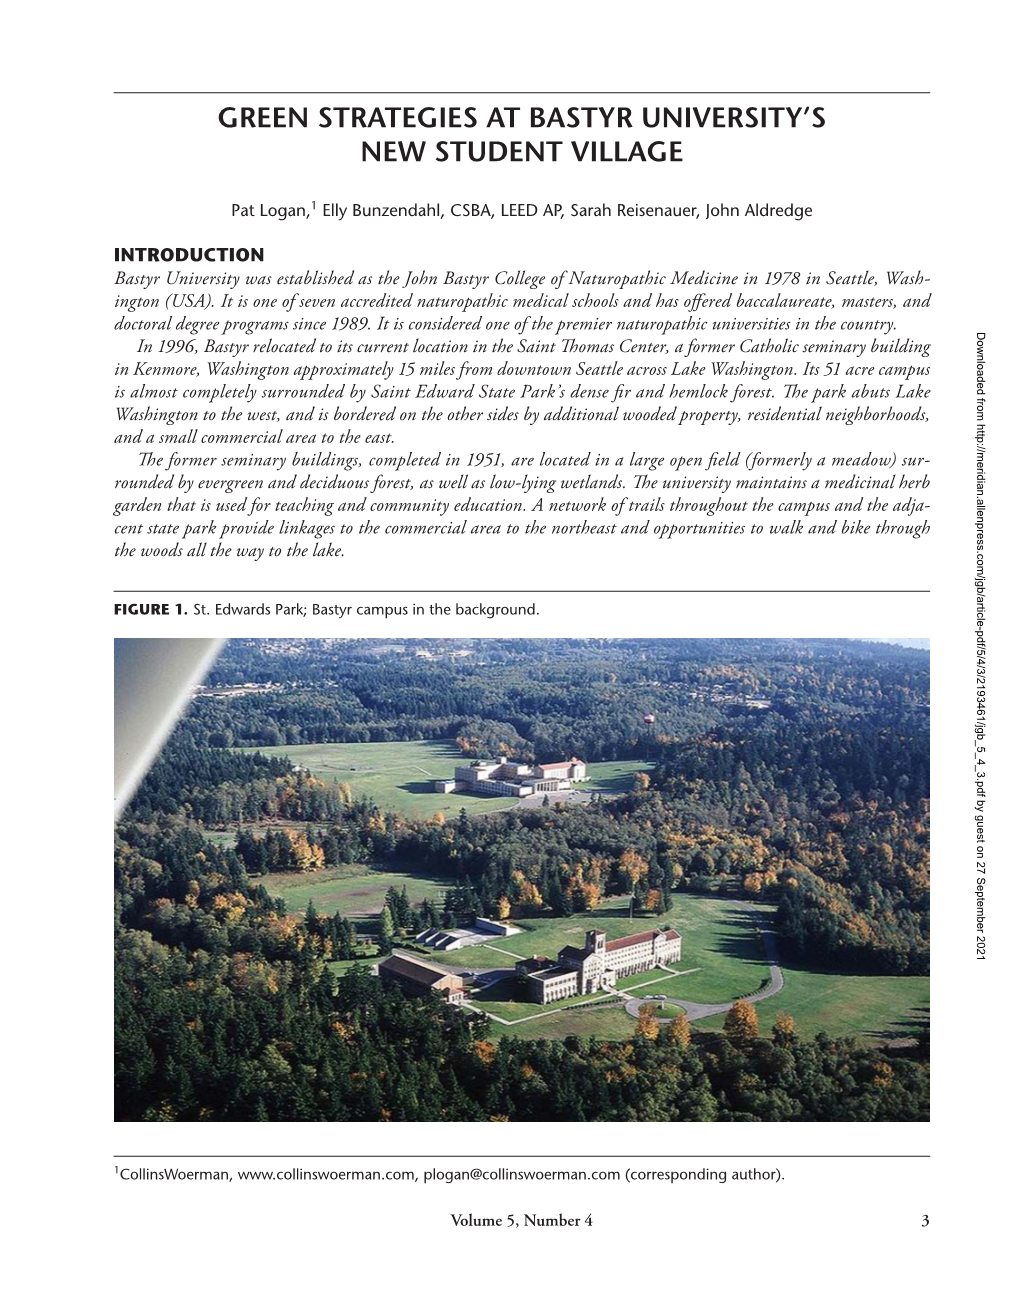 Green Strategies at Bastyr University's New Student Village